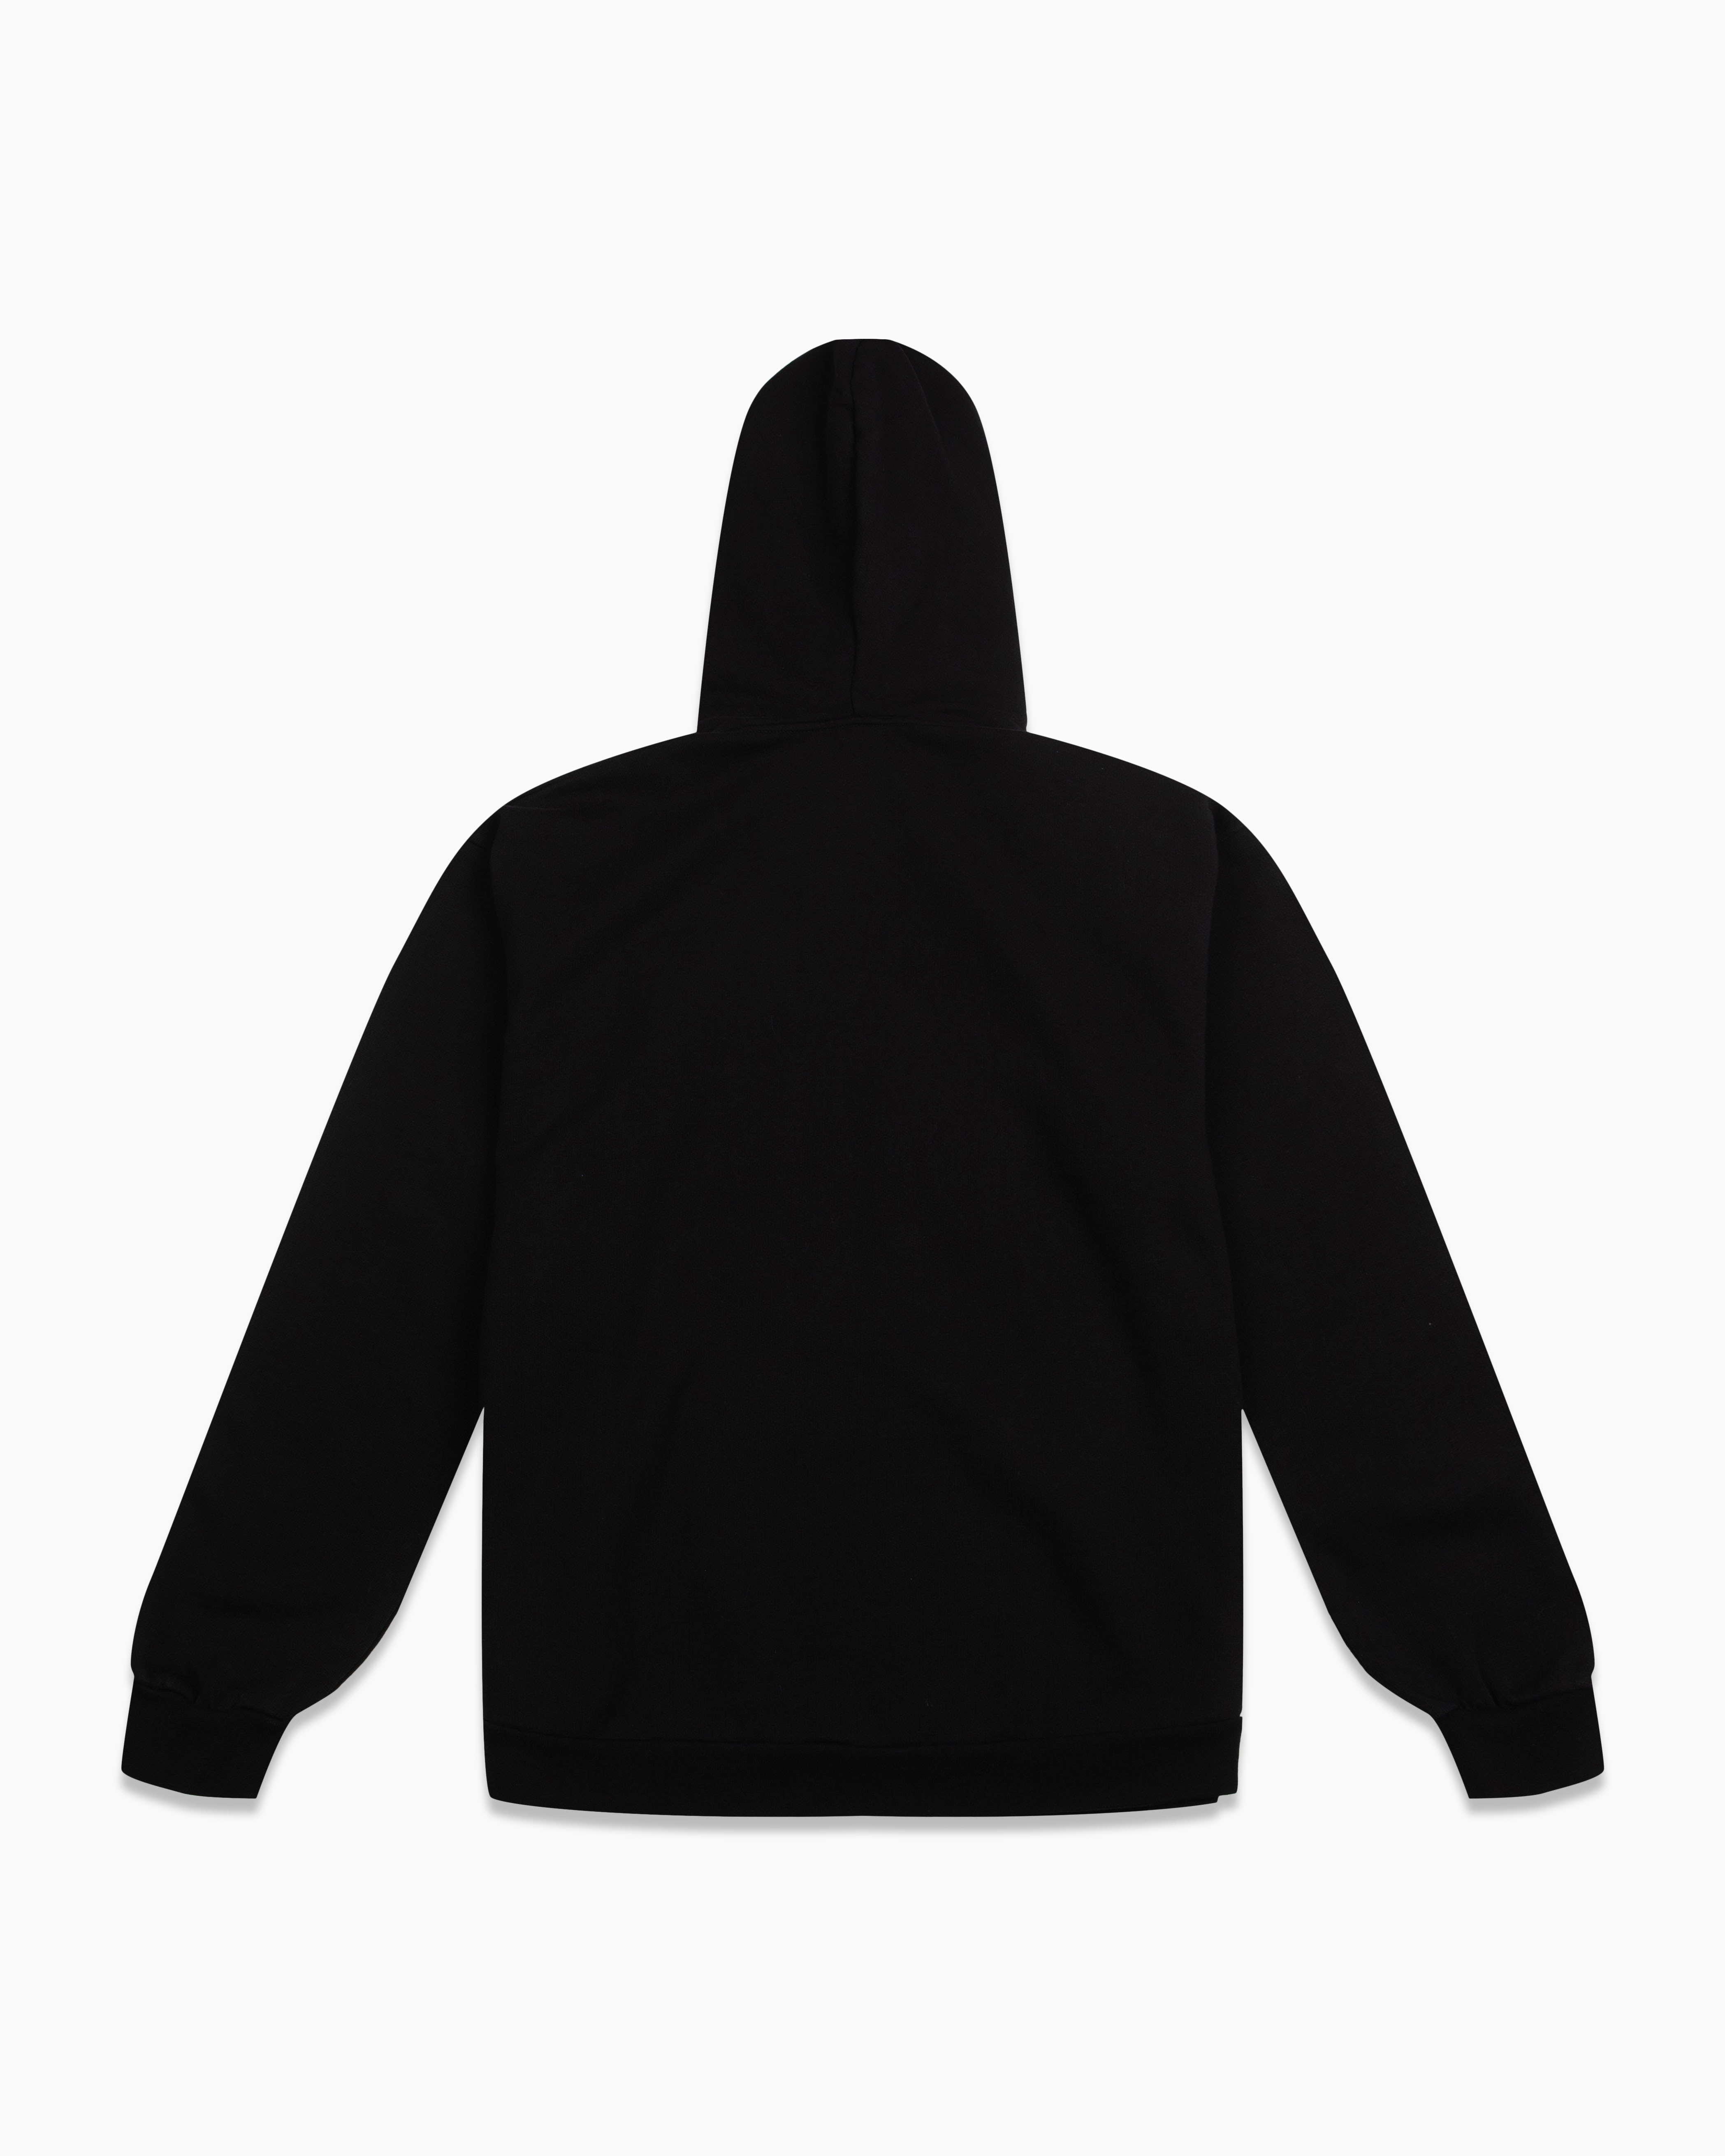 Sweater Hoodie 11 BLK DNM Tops Sweats & Hoodies Black